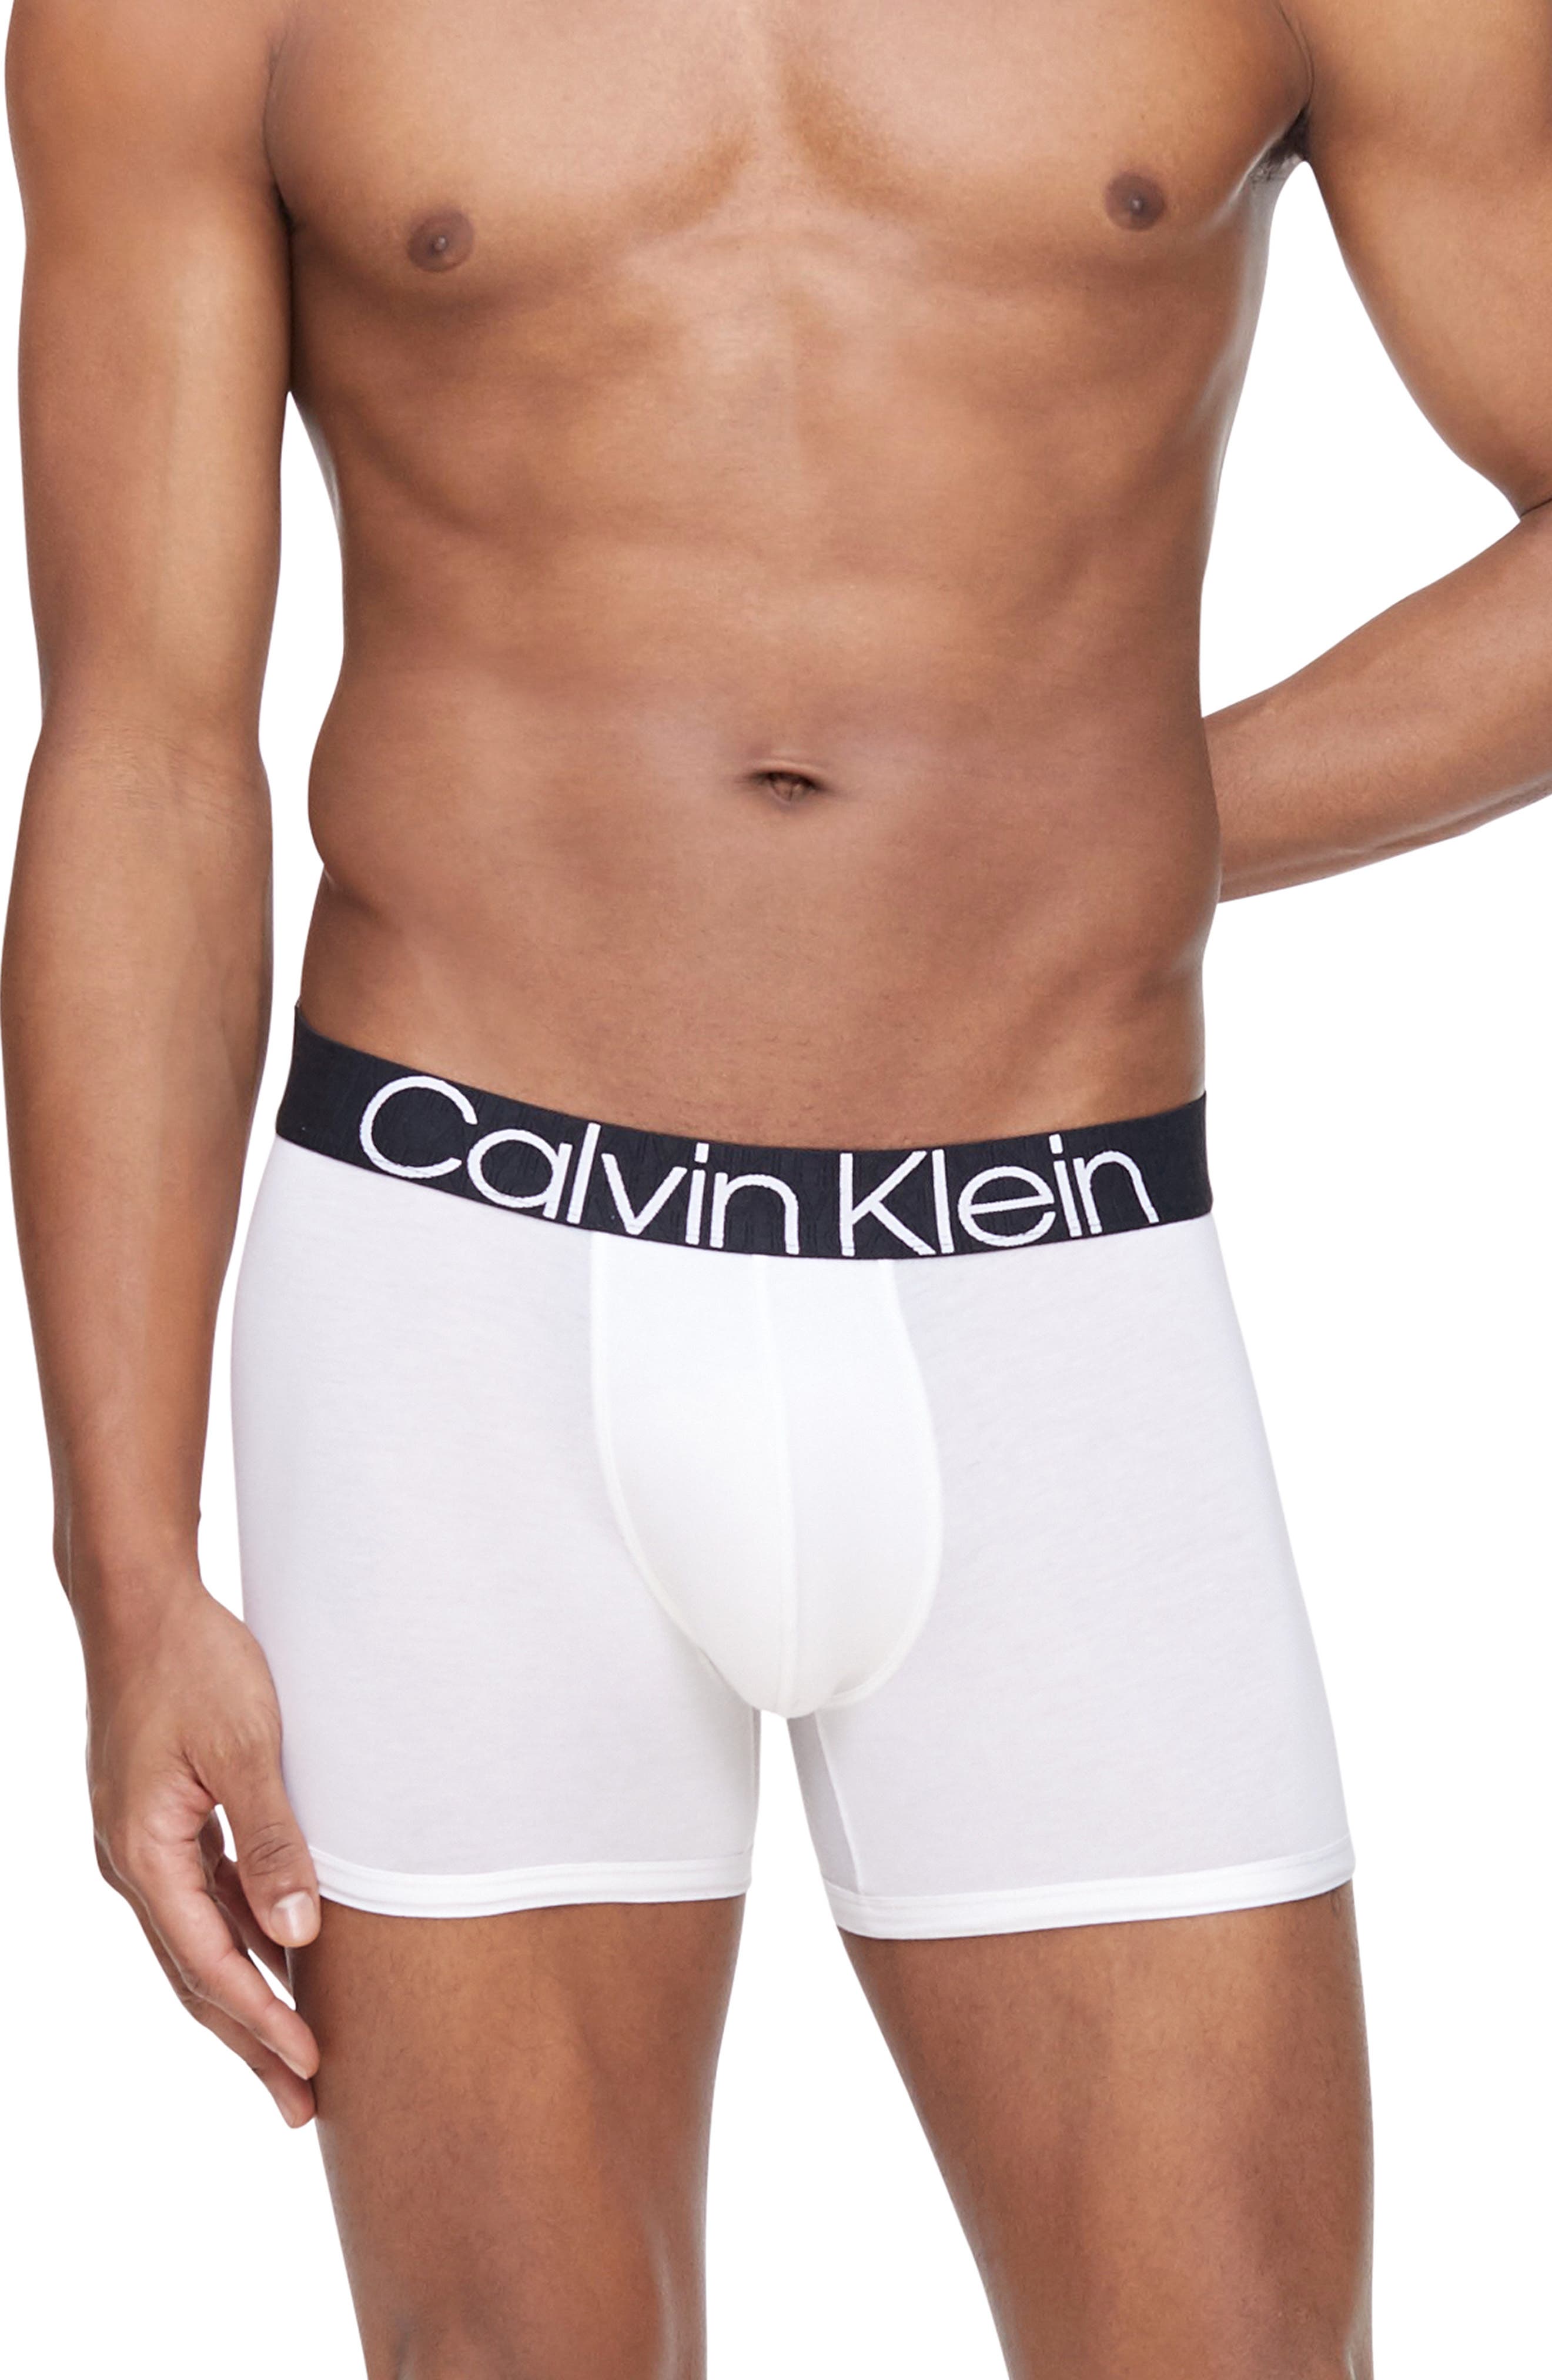 UPC 790812539415 product image for Men's Calvin Klein Eco Cotton Blend Boxer Briefs, Size Medium - White | upcitemdb.com